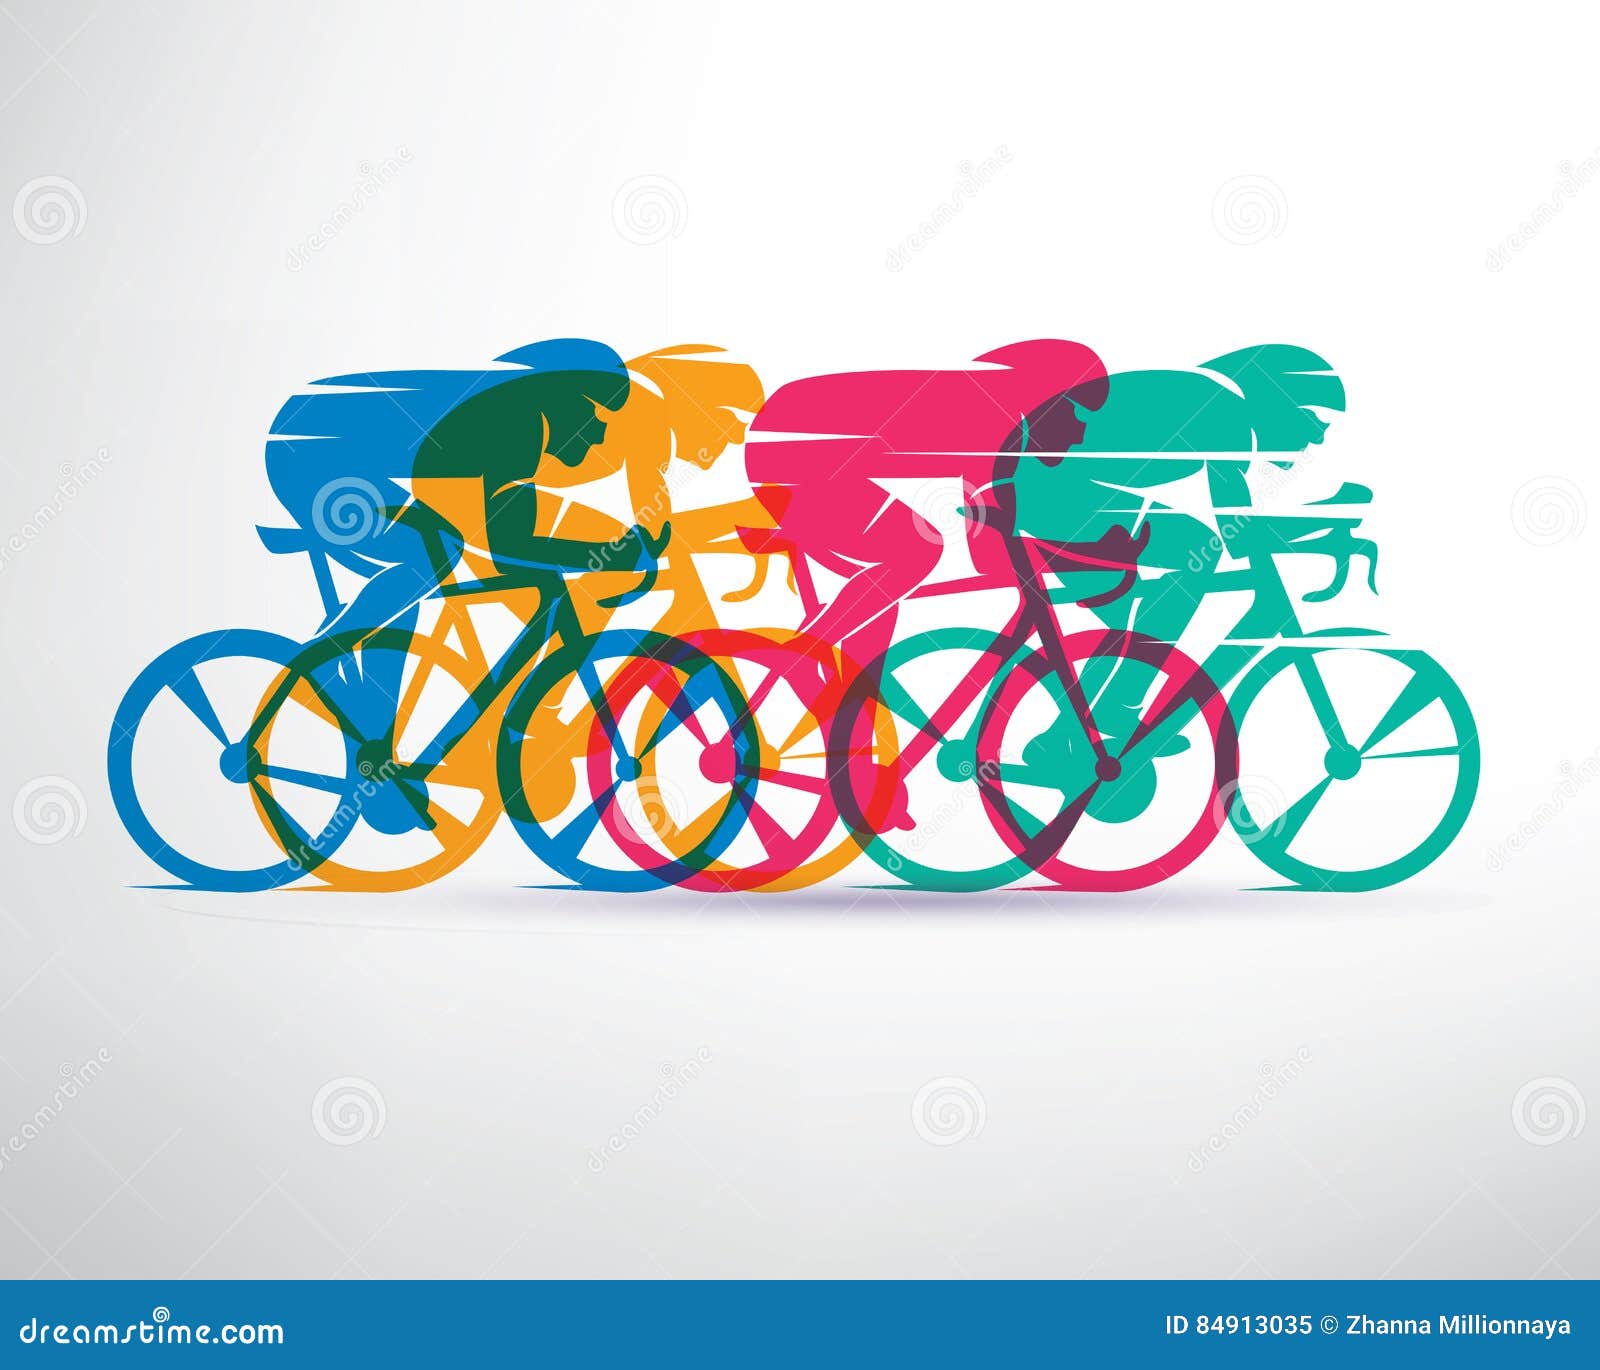 cycling race stylized background